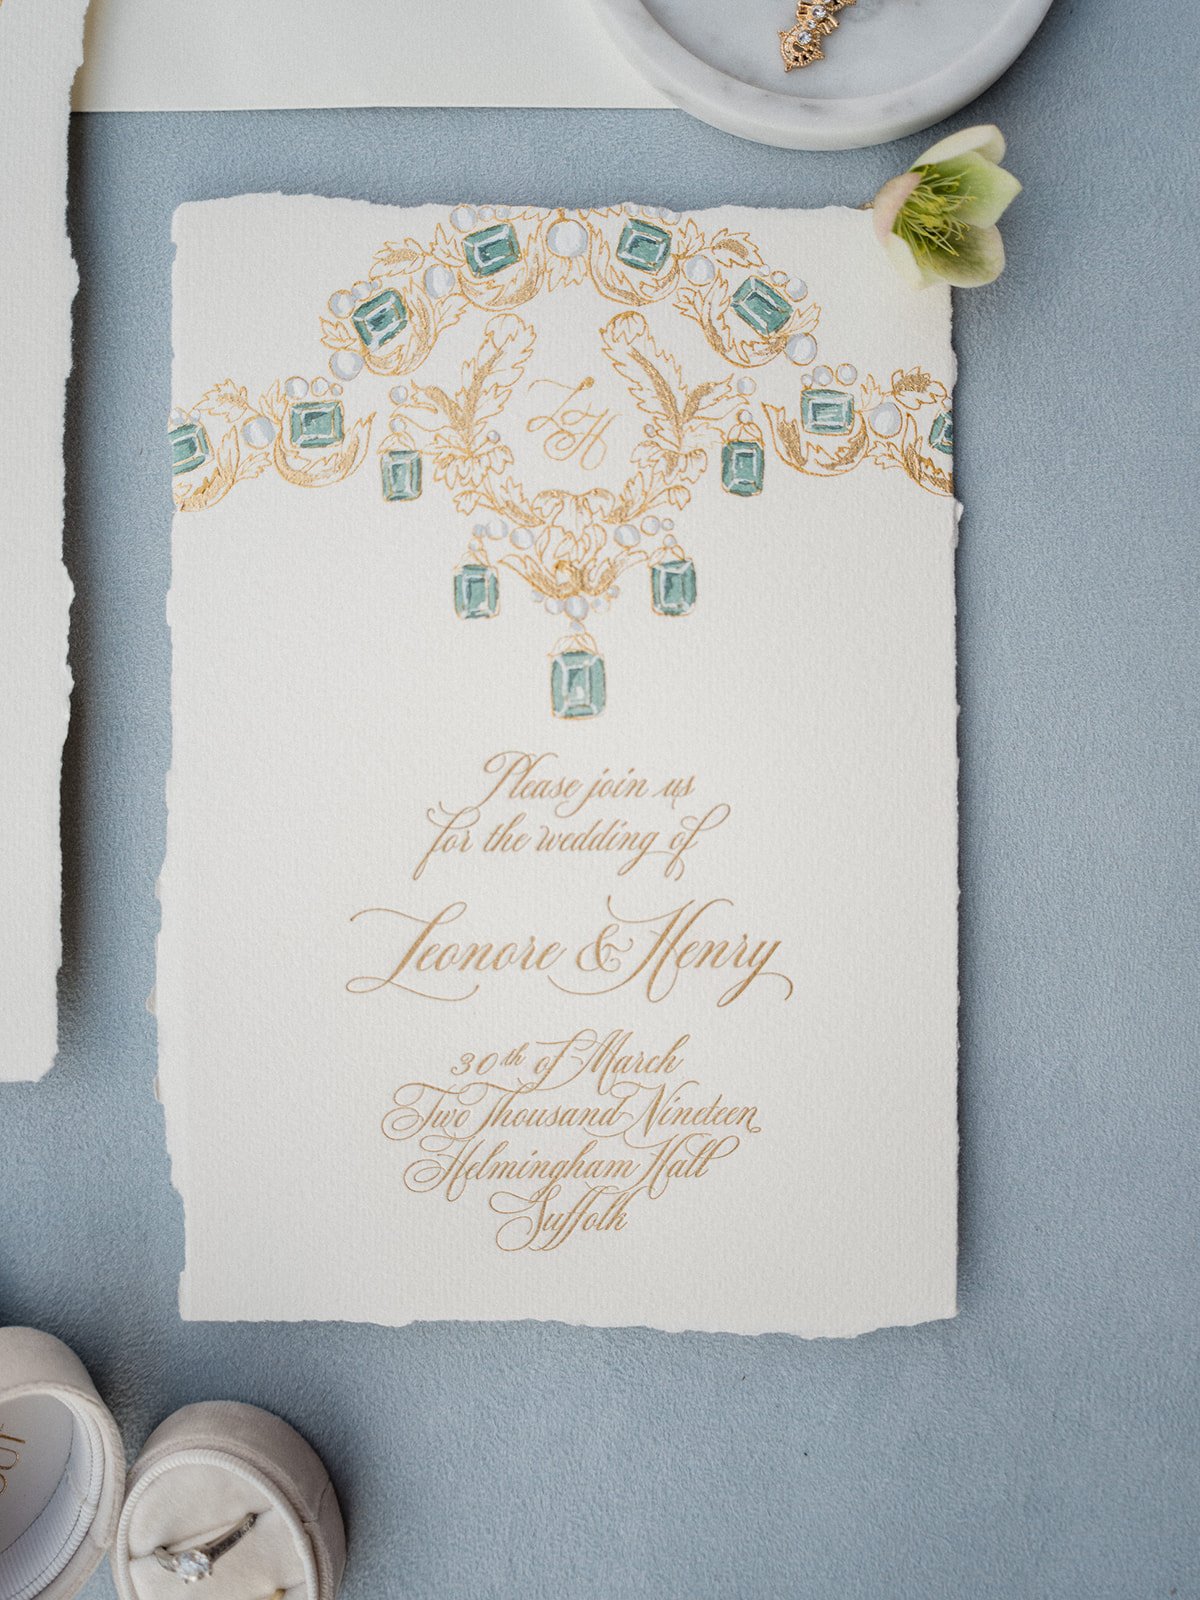 Royal wedding stationery designed by Carissimo Letterpress